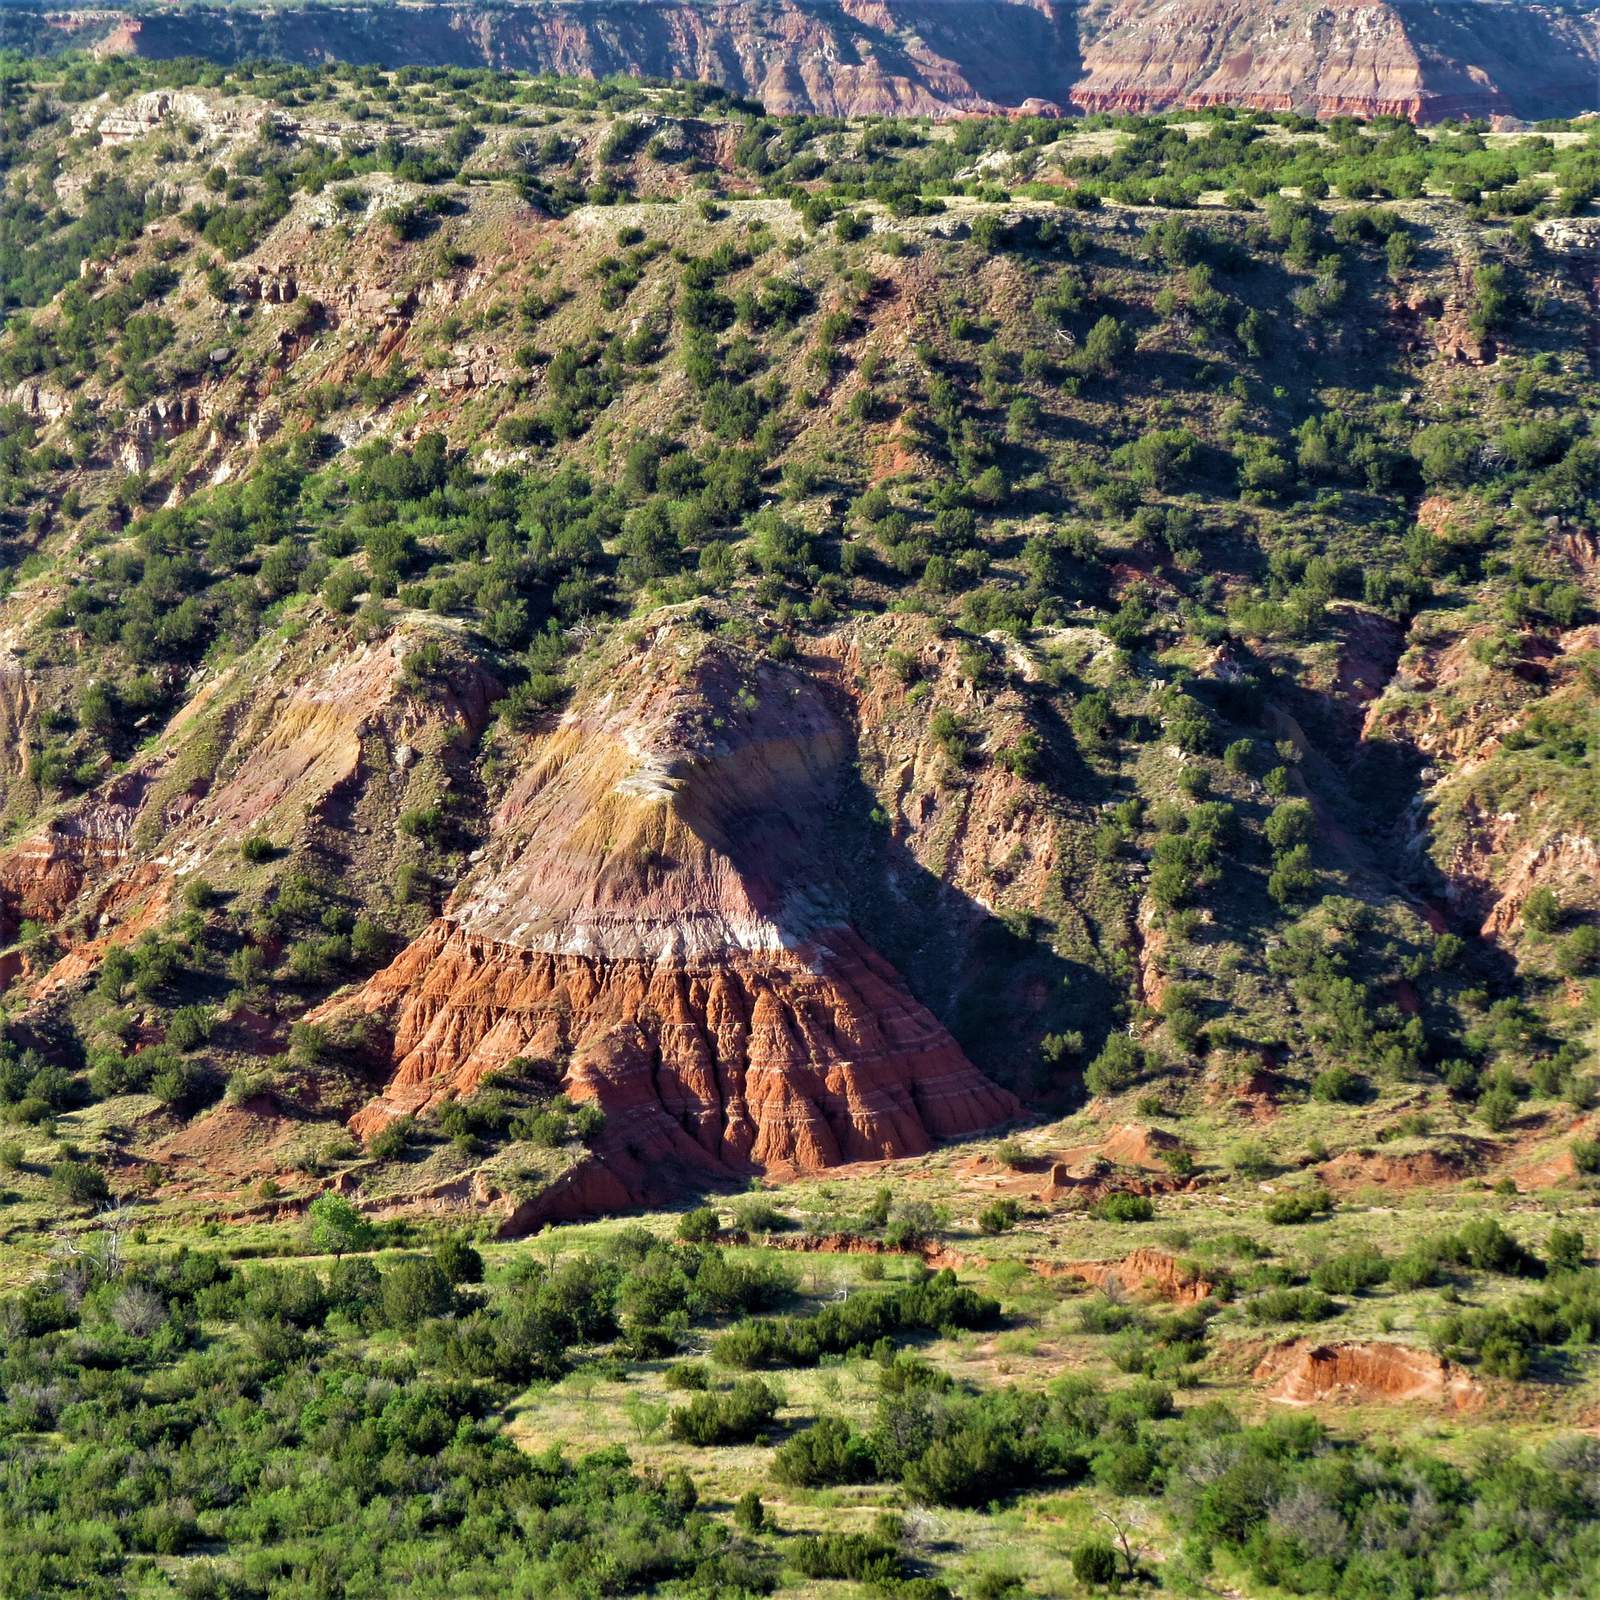 Texas travel: Plan a road trip to Palo Duro Canyon